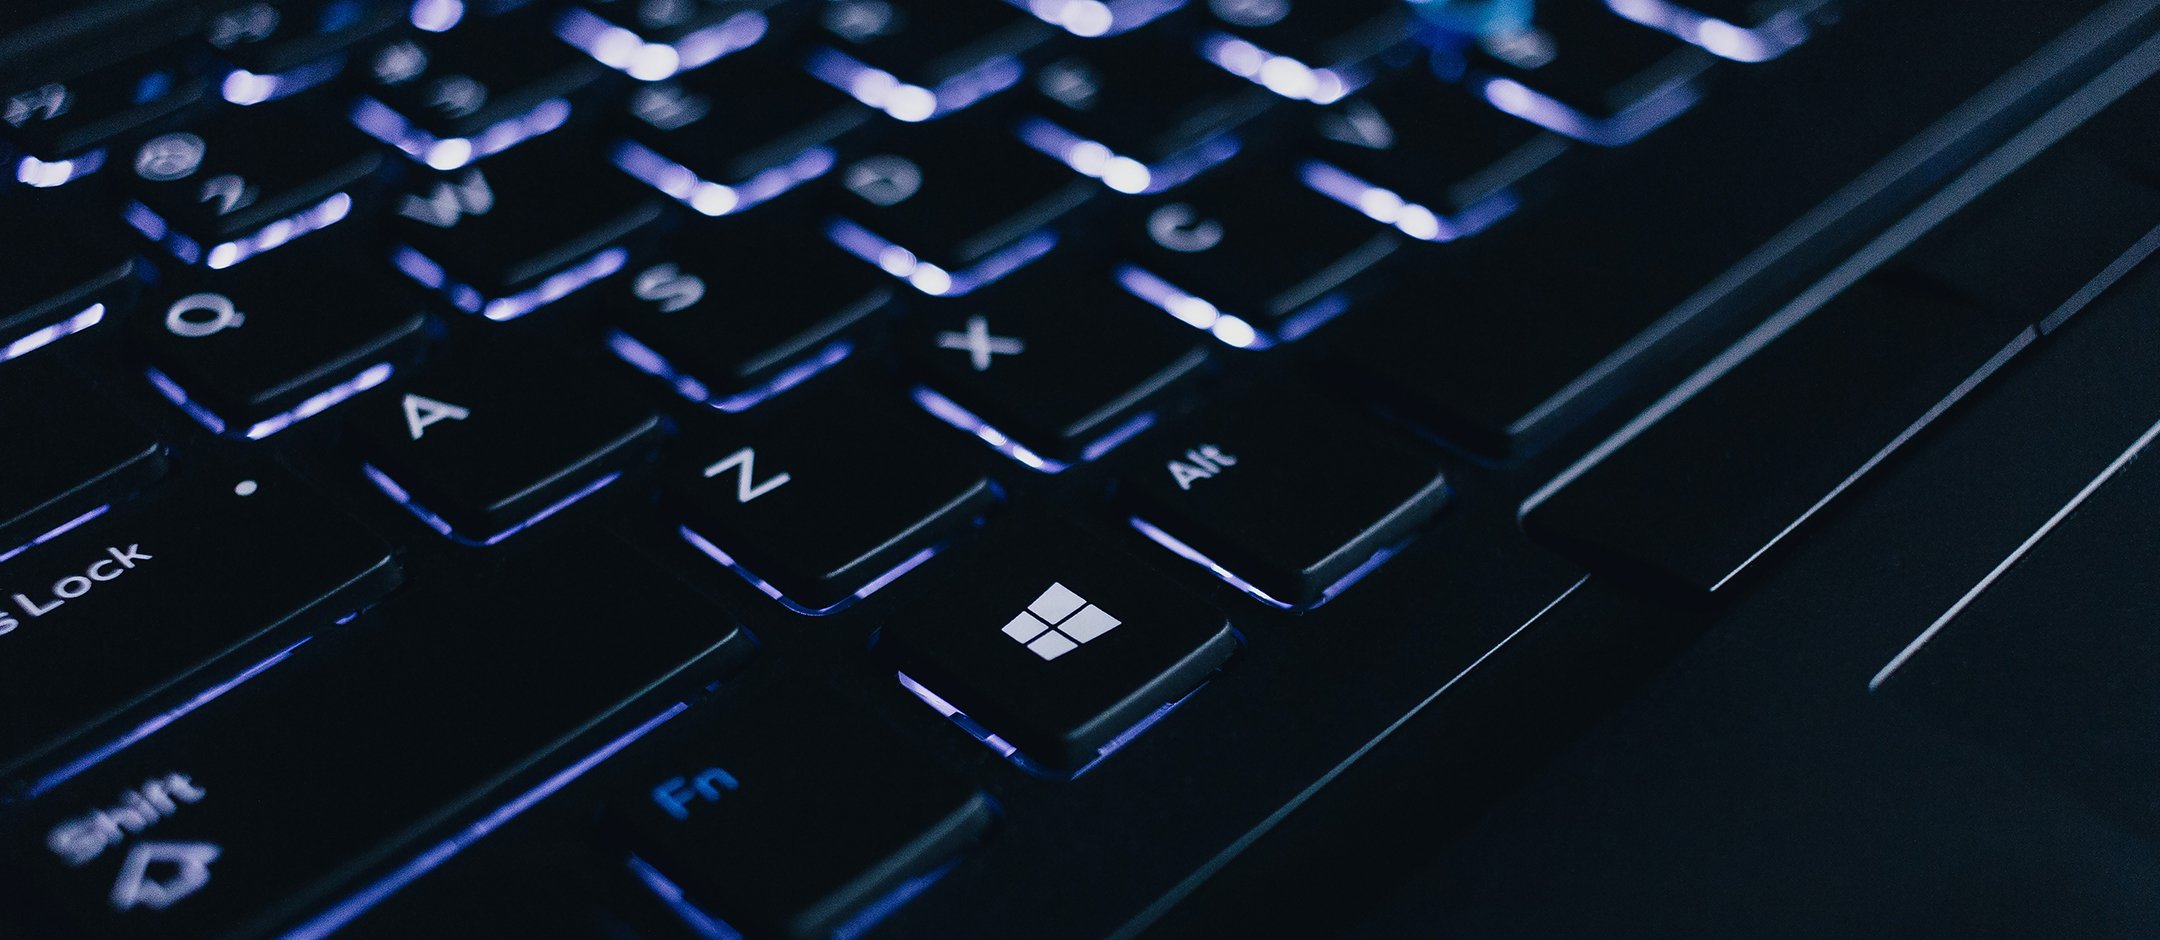 close-up image of a windows keyboard 